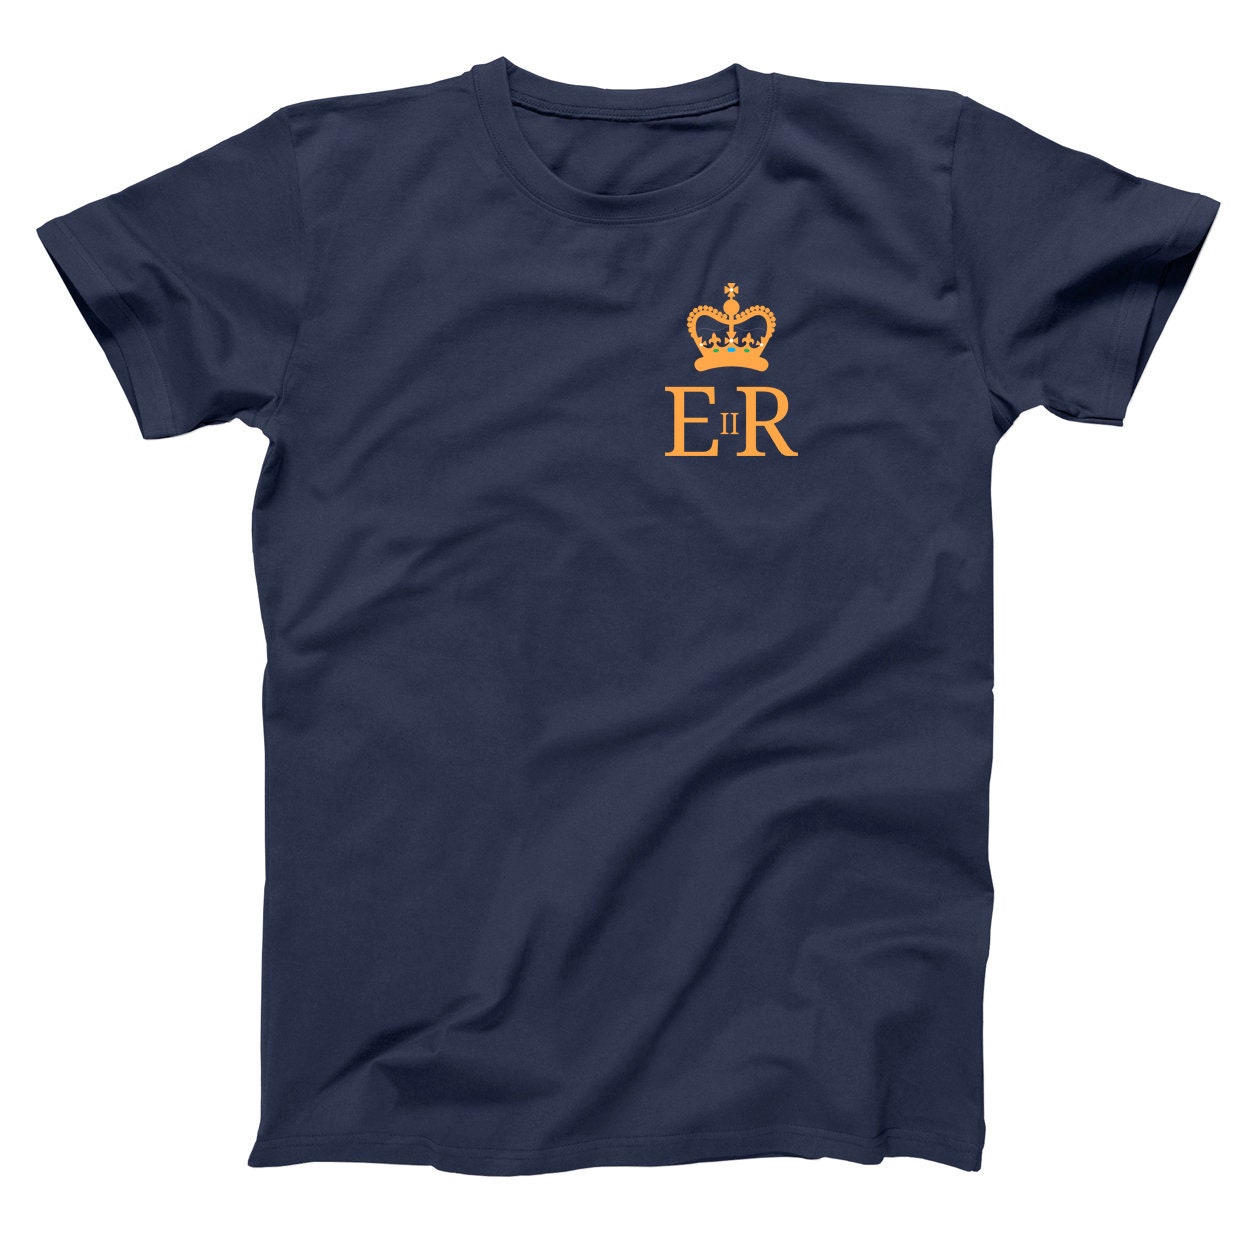 - - Cute The Crown Monarch England Uk British Flag E2r Royal Gold Seal Rip Queen Elizabeth Ii Shirt